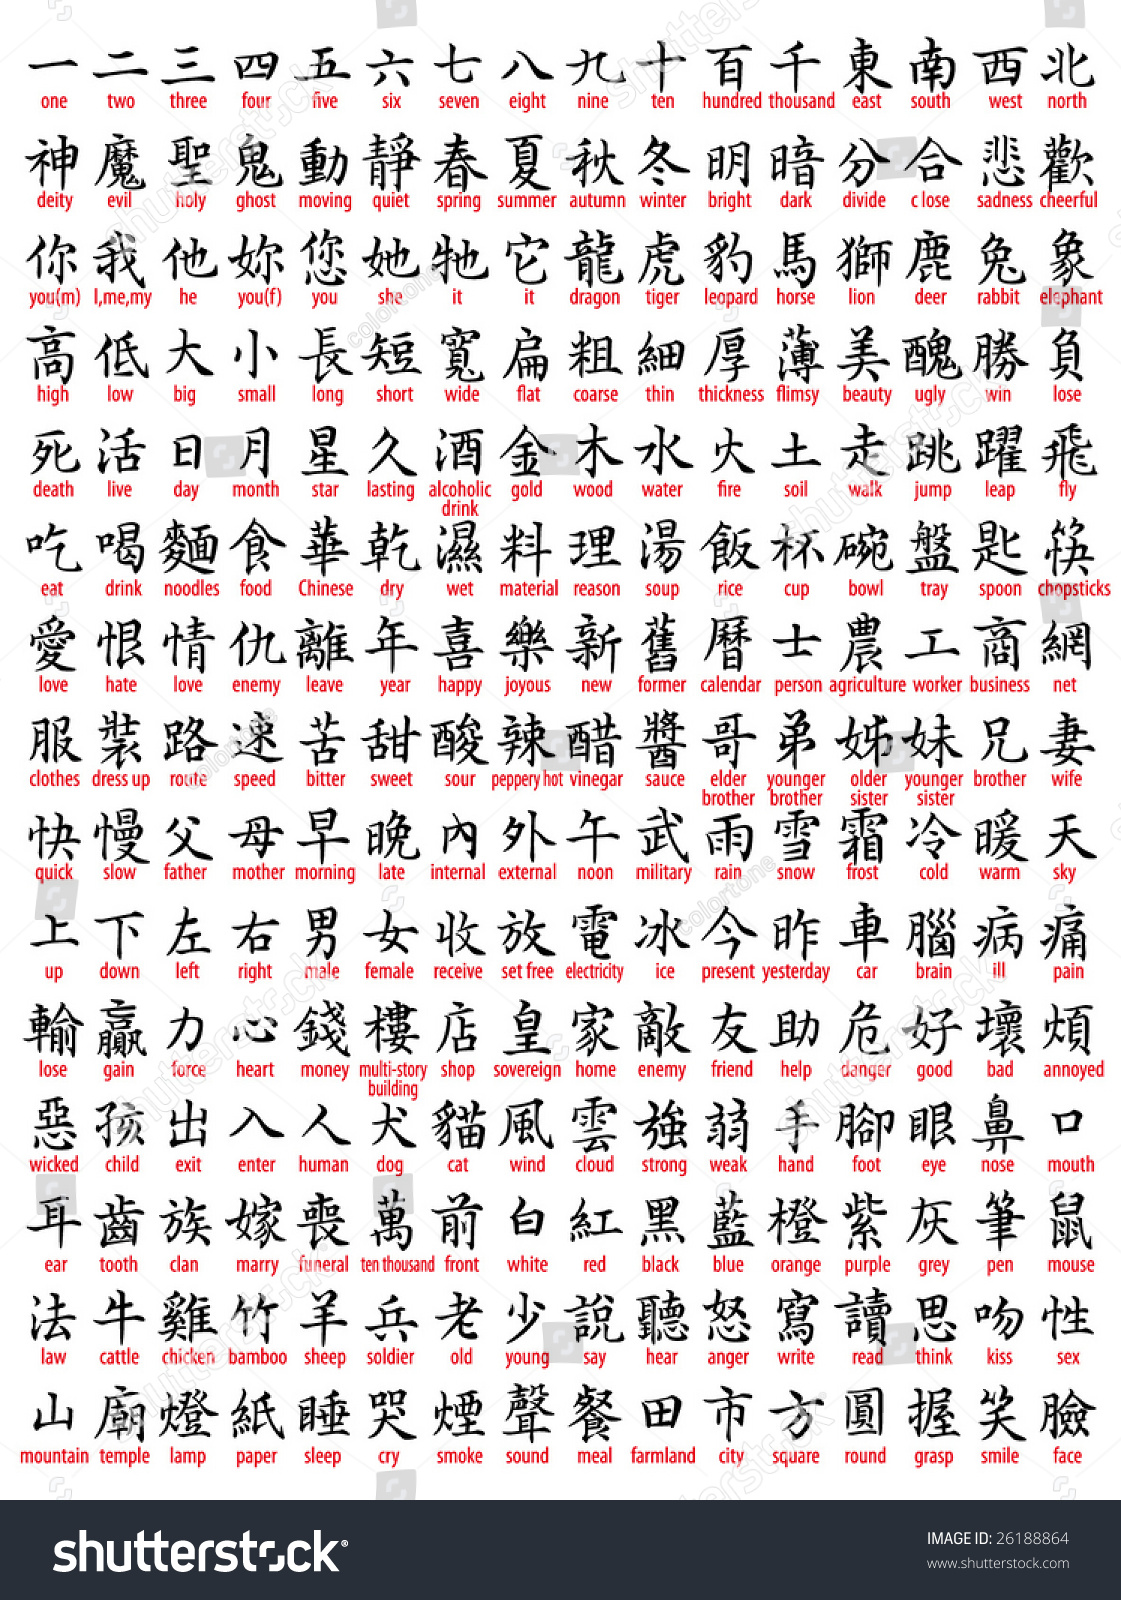 english-translation-the-alphabet-in-chinese-salar-language-alphabet-and-pronunciation